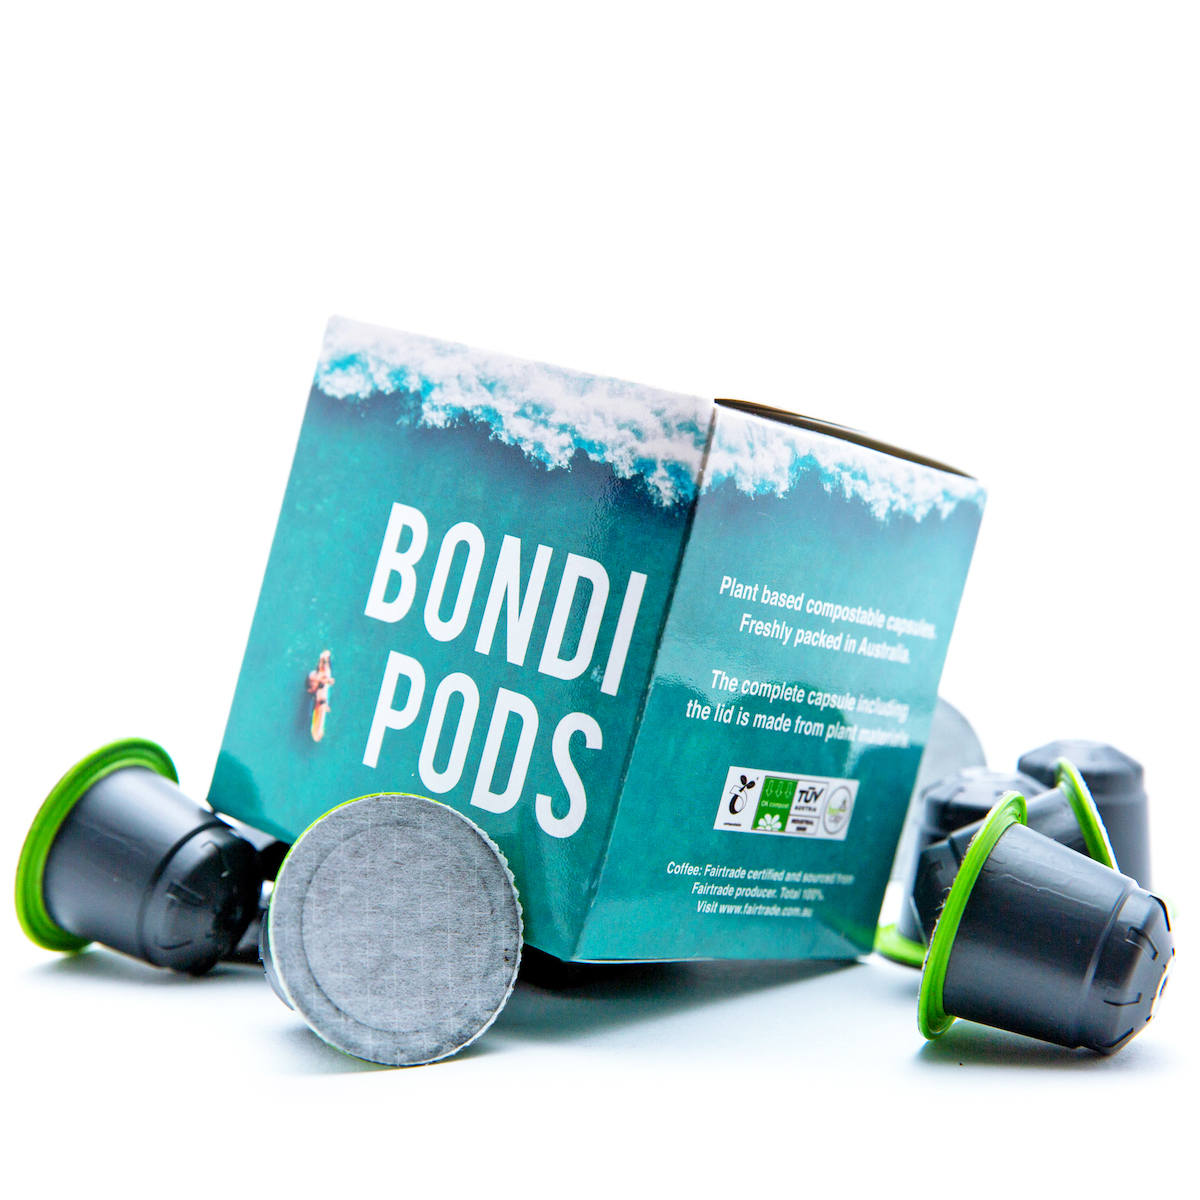 Bondi Pods Packaging. Image supplied